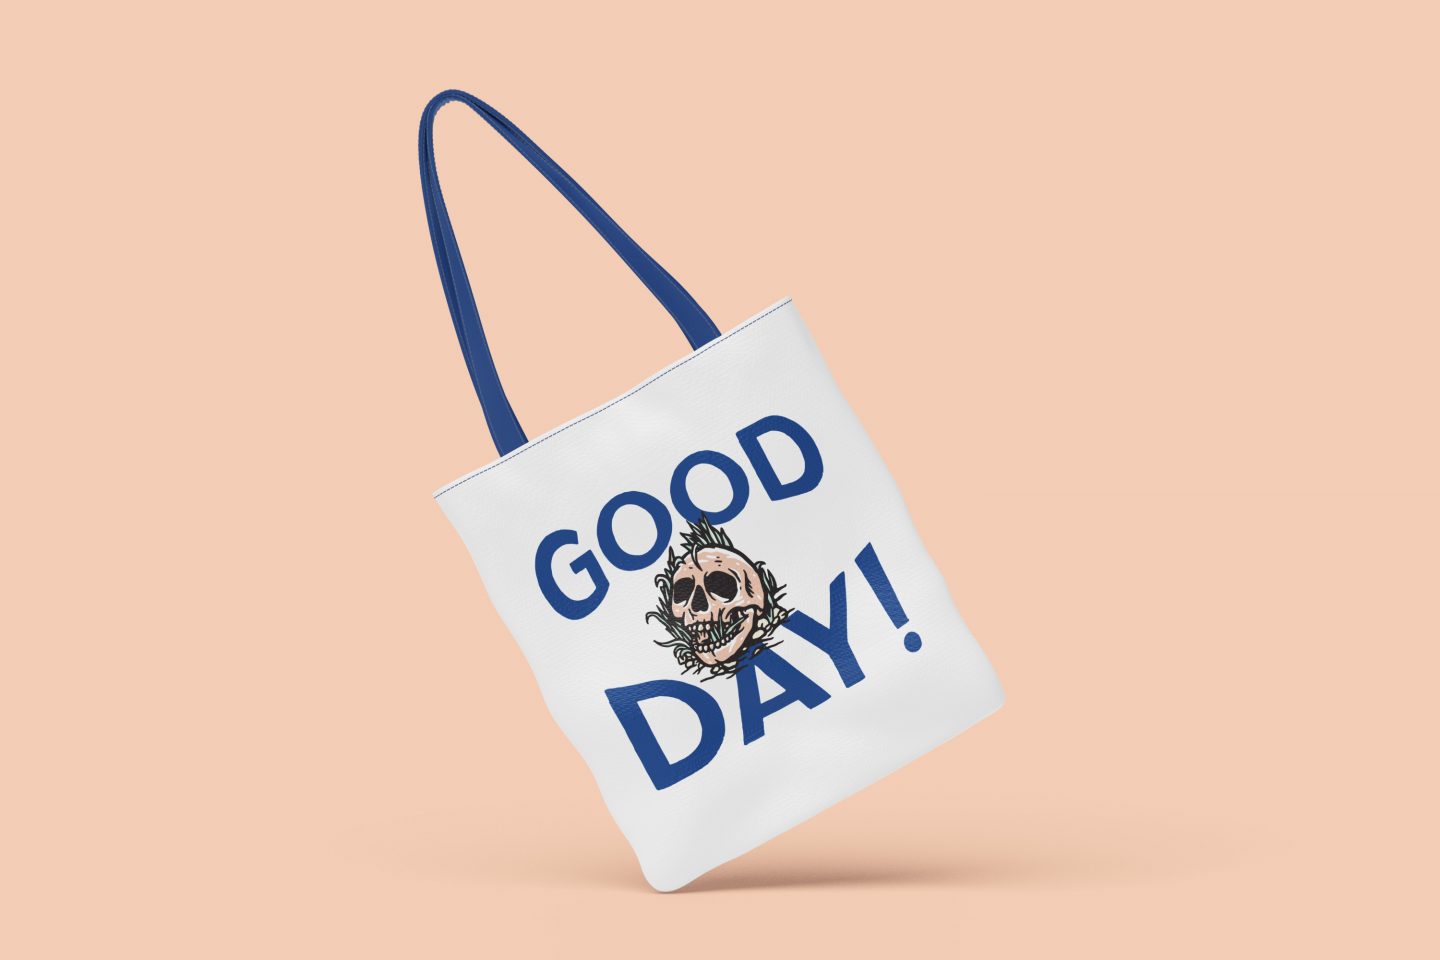 Good Day logo on bag